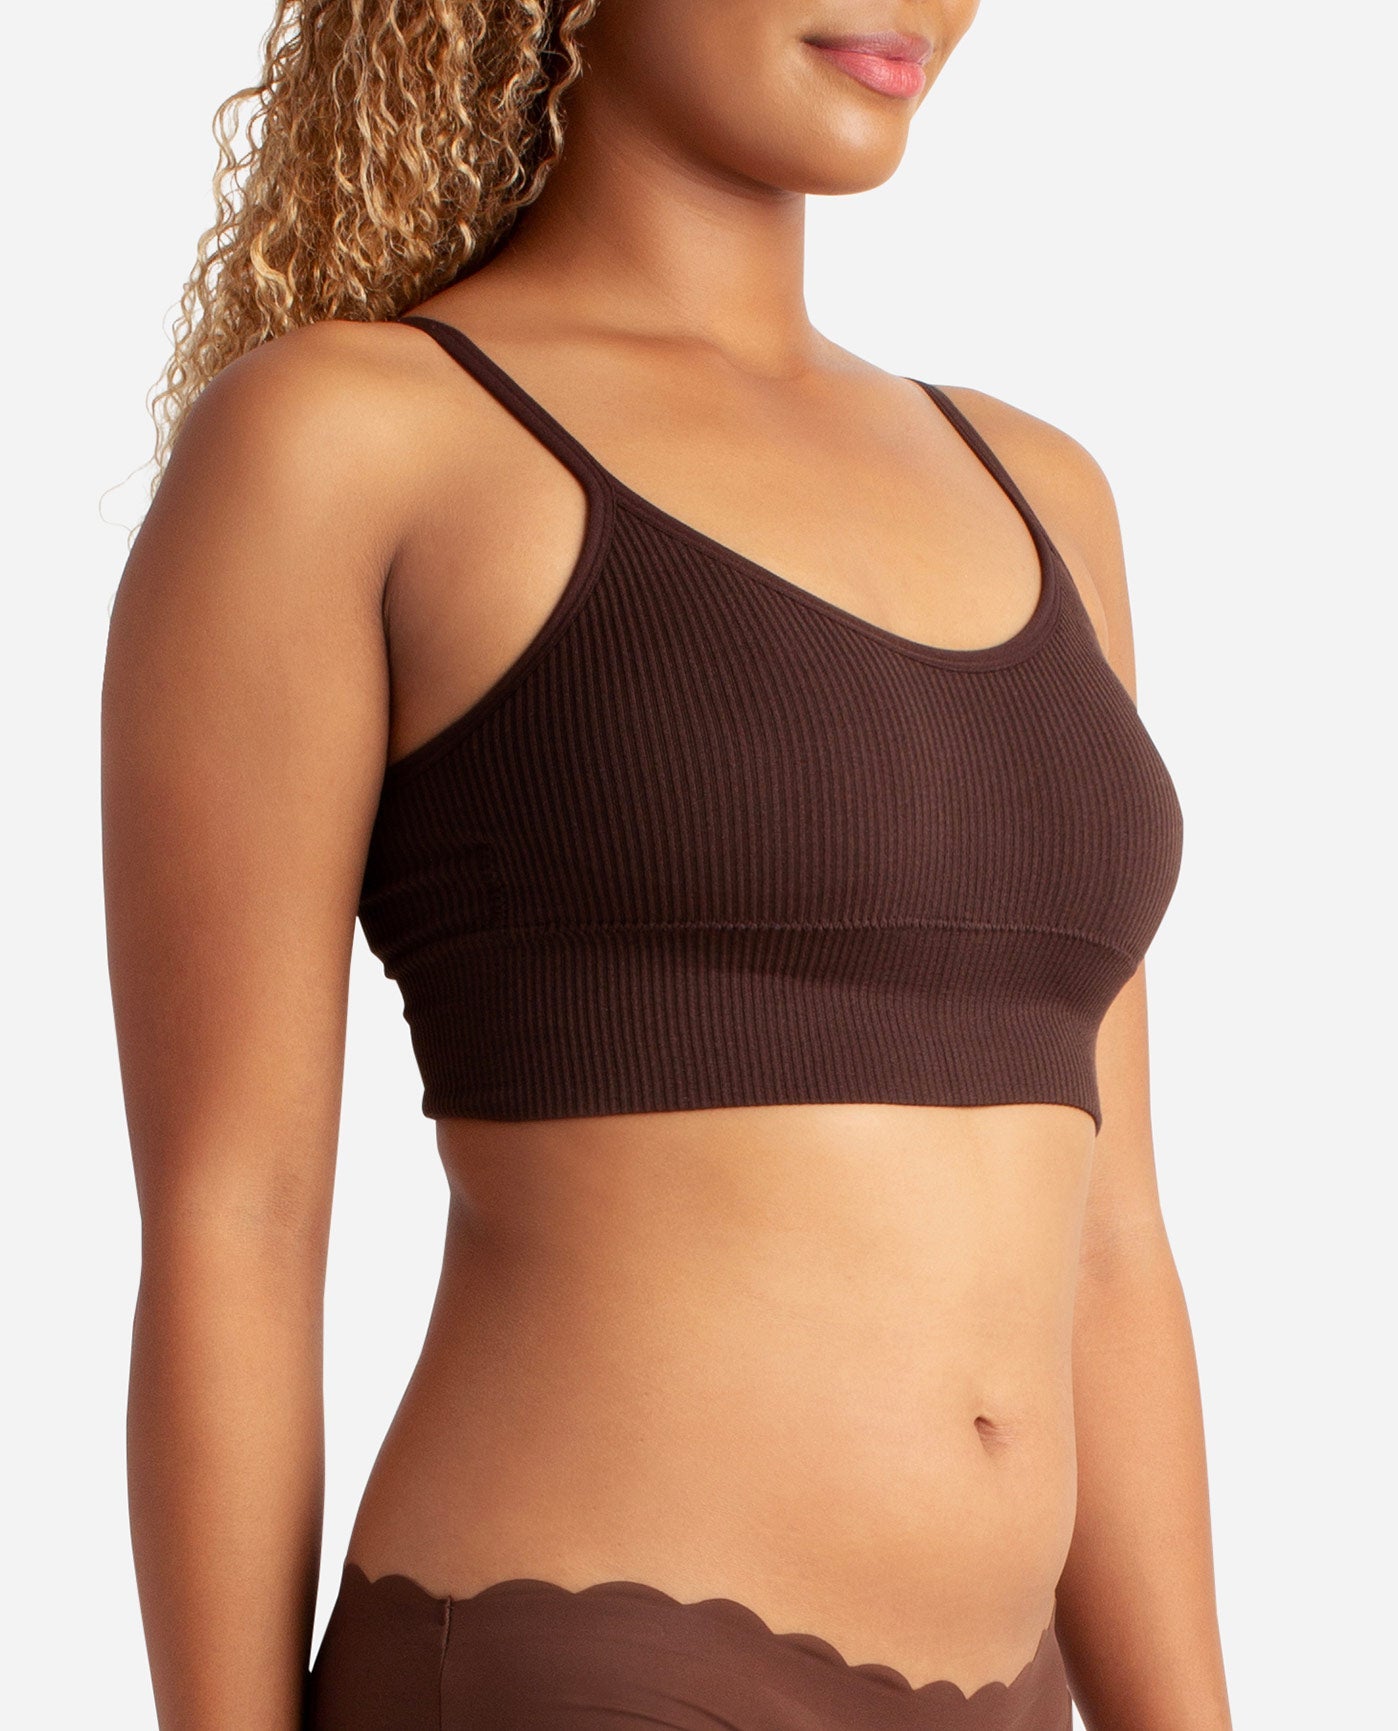 Danskin women's size 36B bra NWT - $11 New With Tags - From Megan